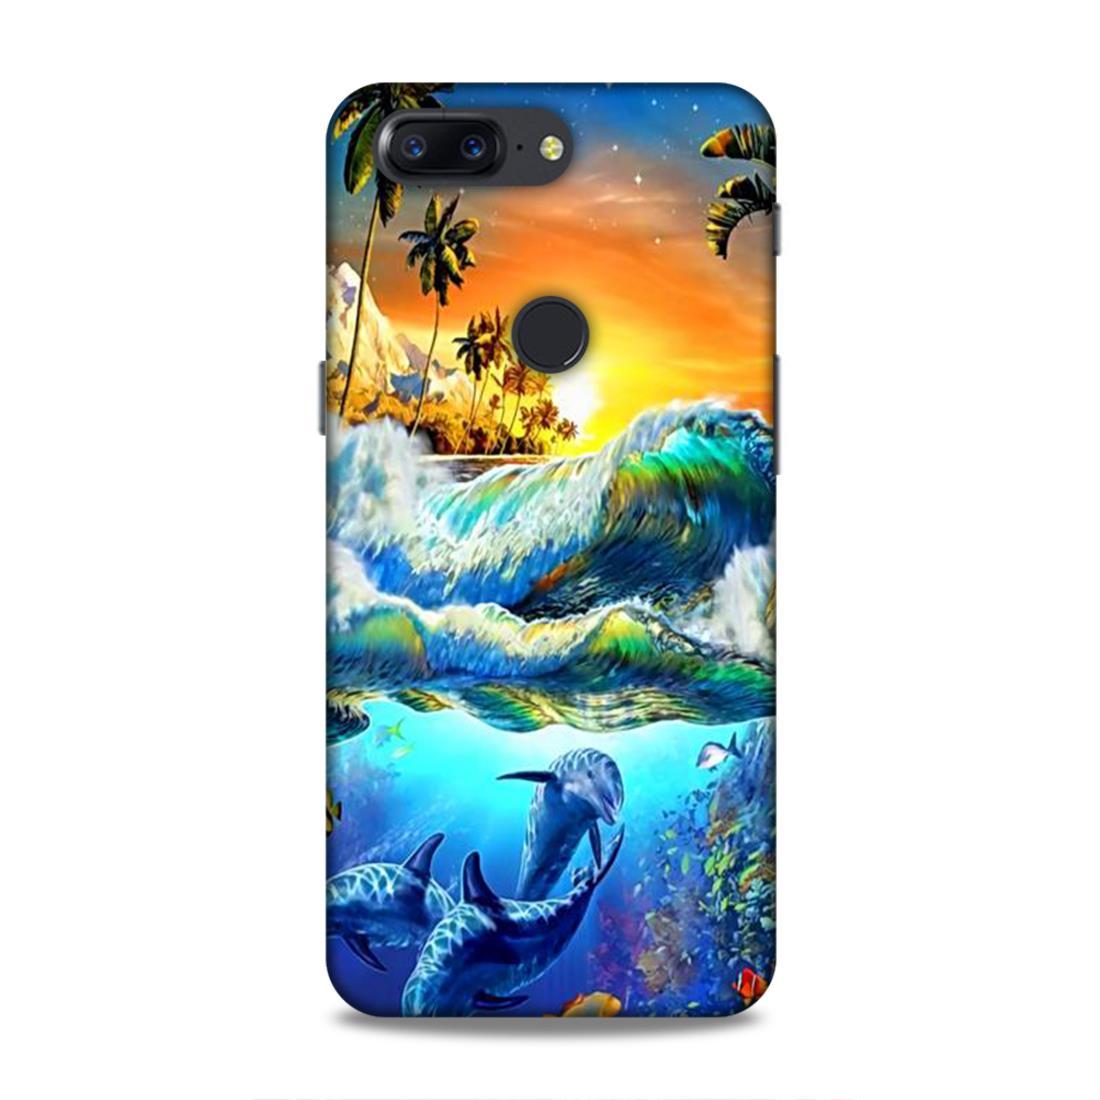 Sunrise Art OnePlus 5T Phone Cover Case